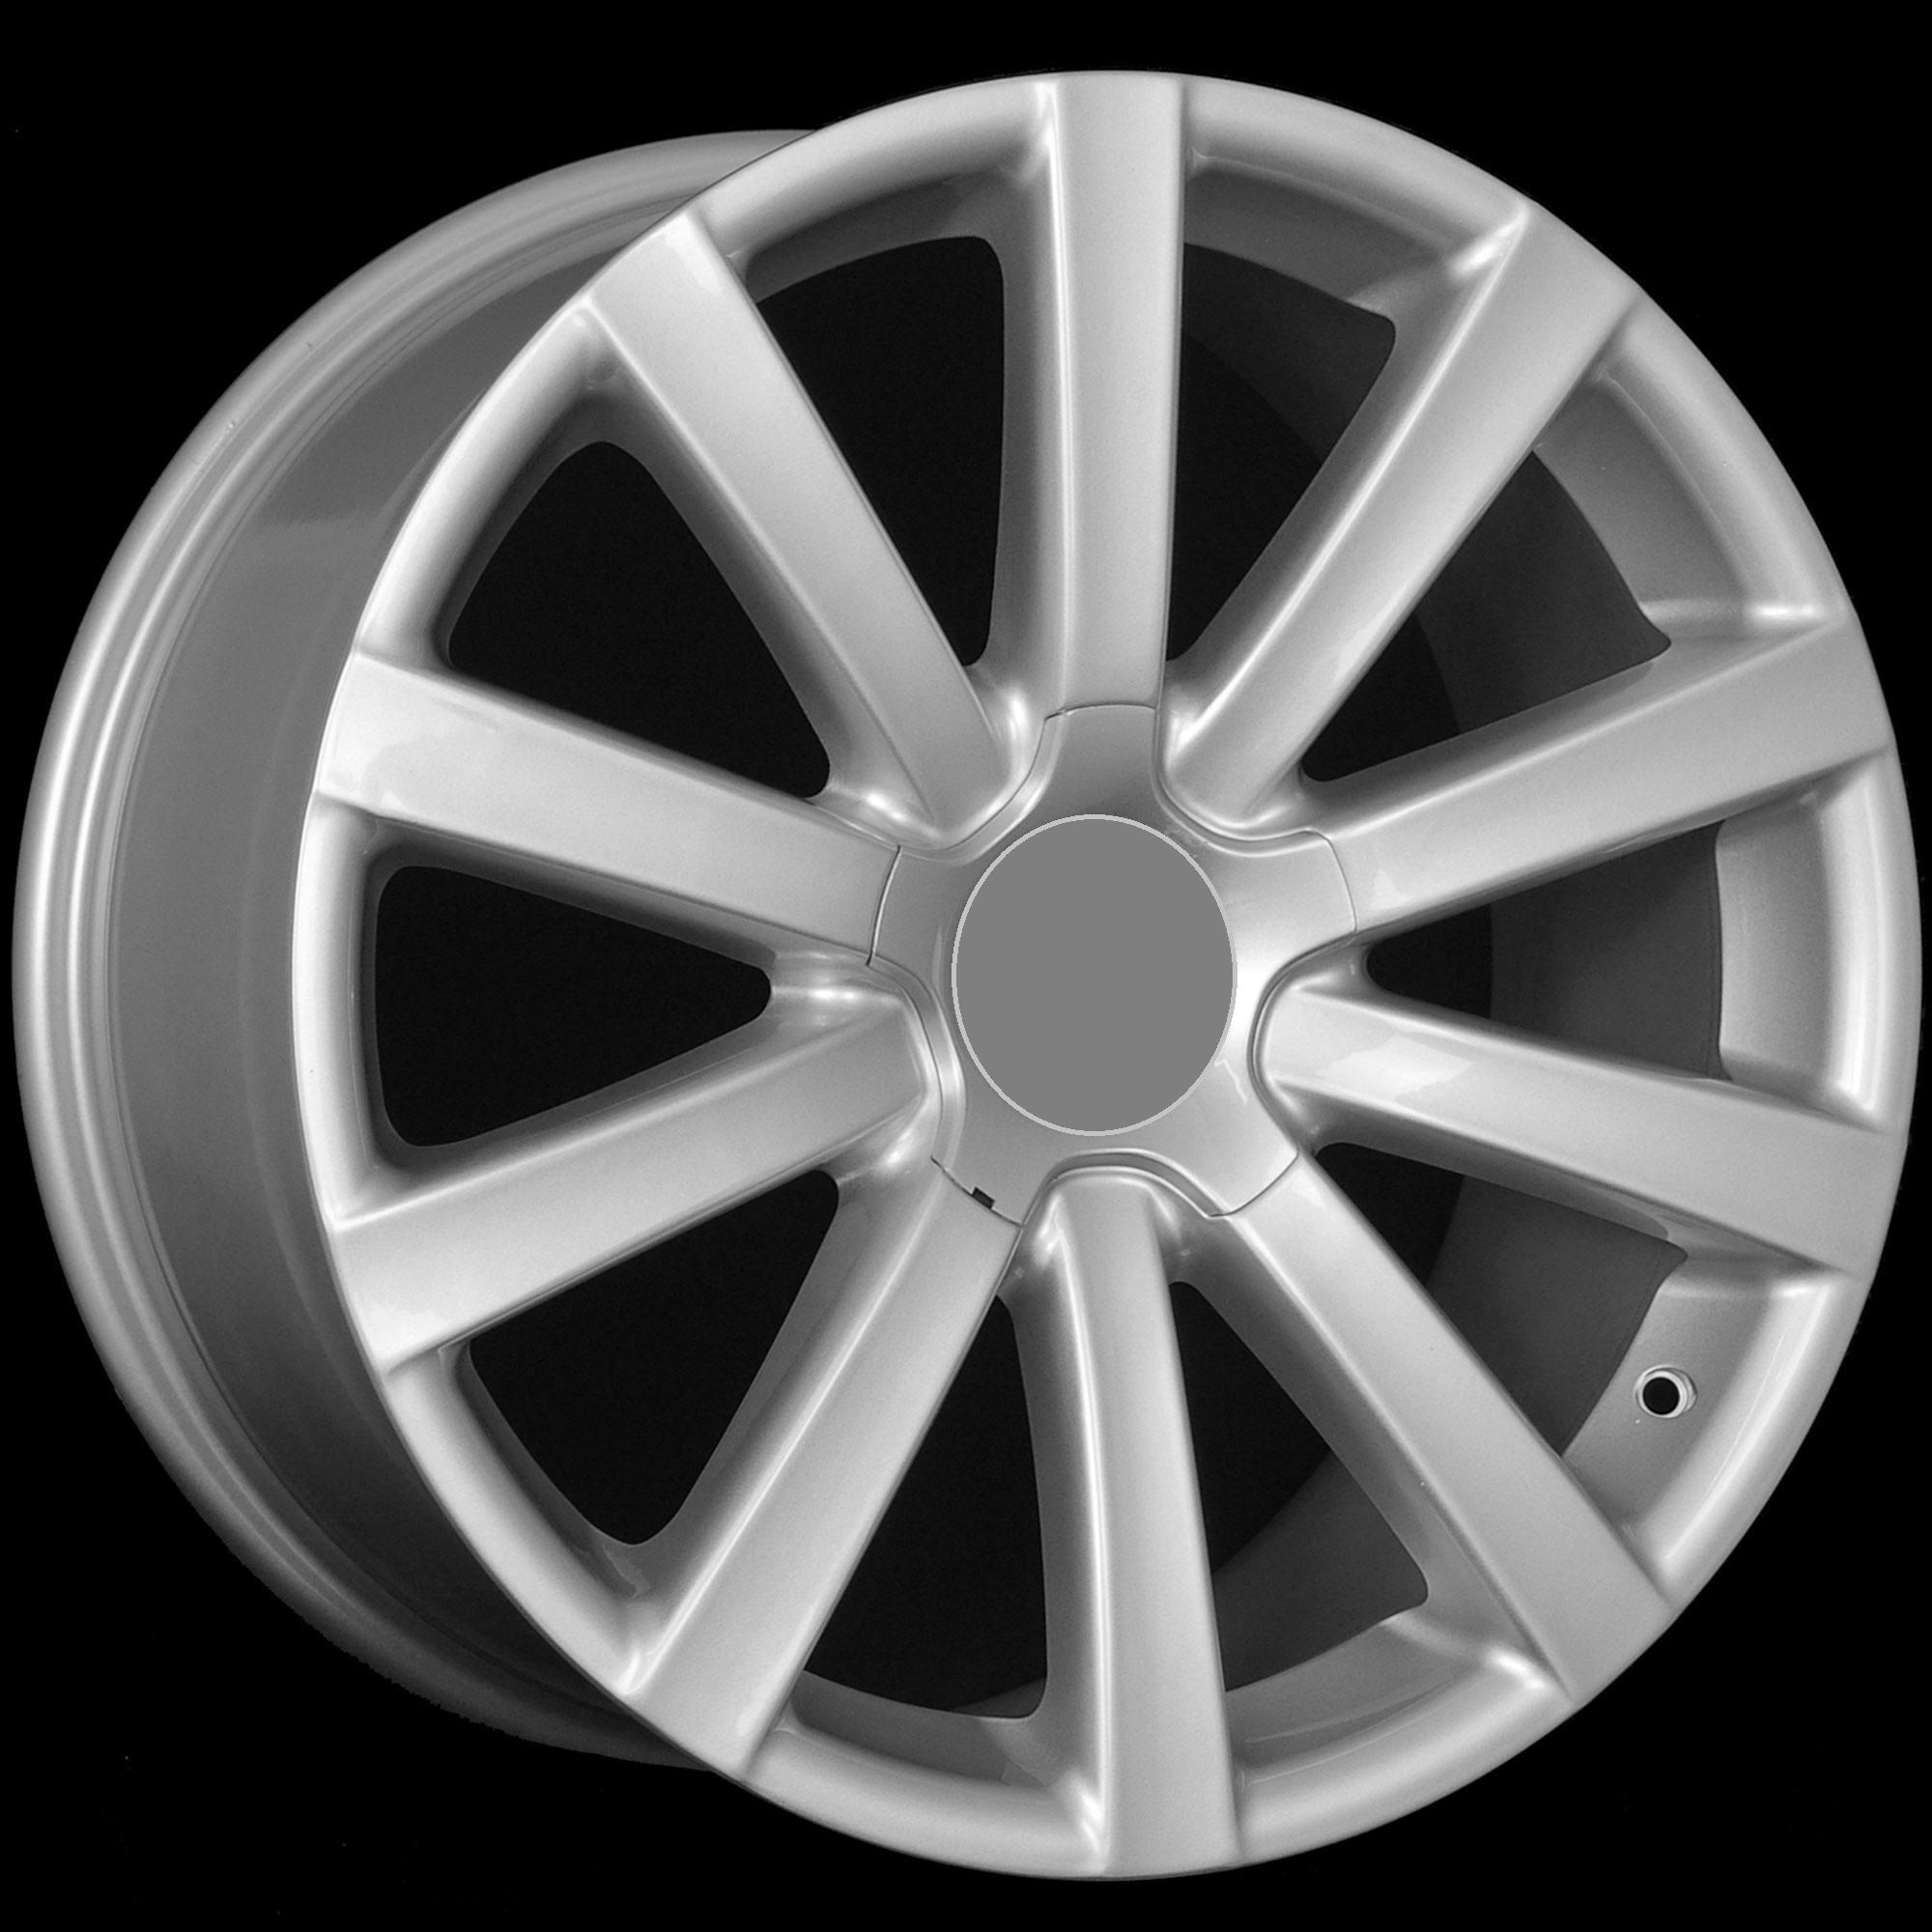 19 VW R32 Style Silver Wheels Rims Fit VW Jetta MKV Mkvi Passat B6 CC